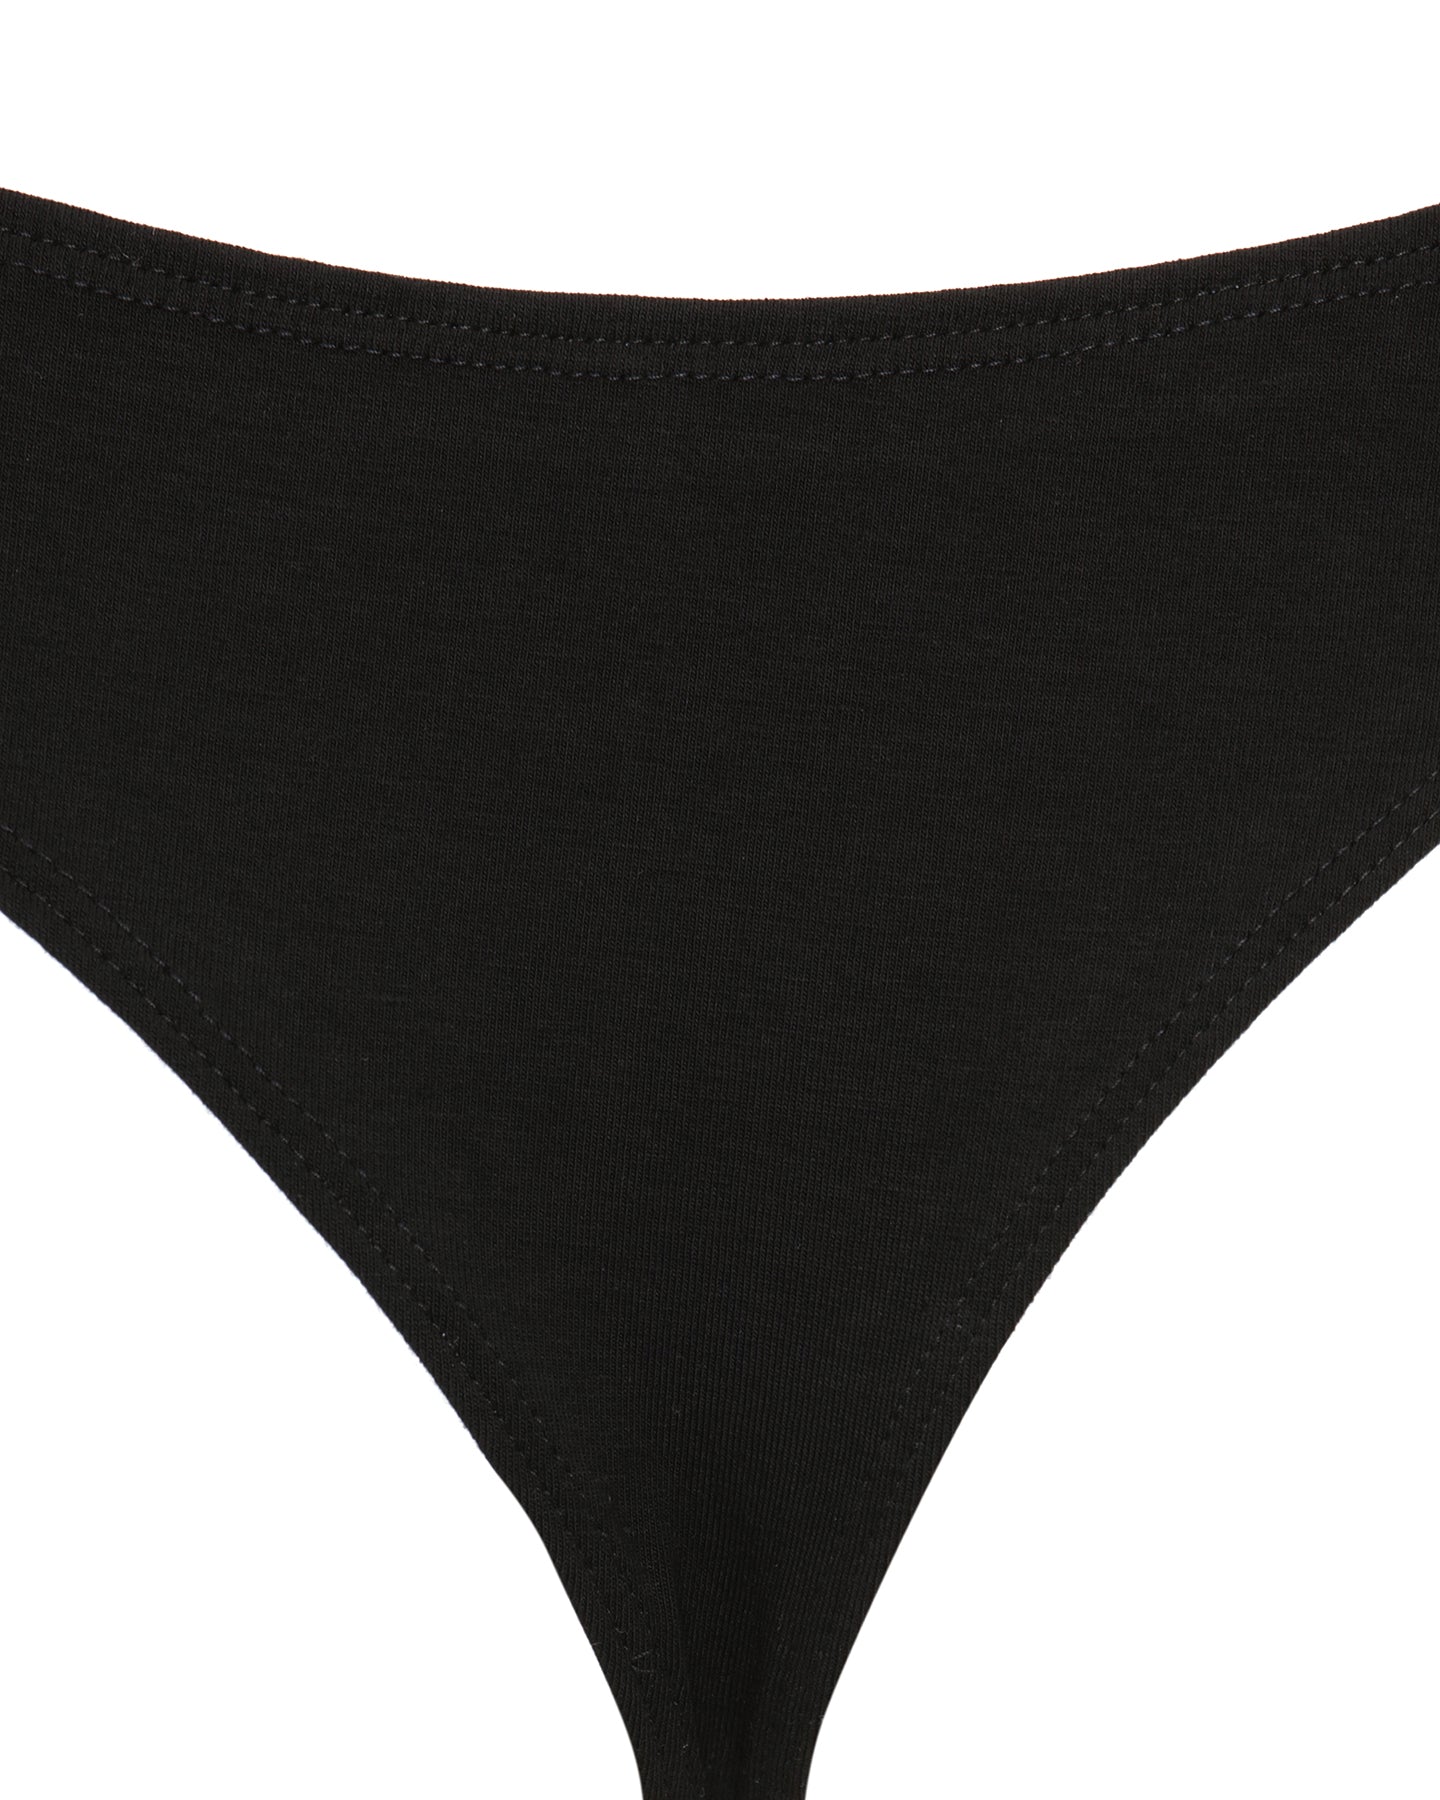 Peau Ethique Elegance Black Organic Cotton Panties Underwear